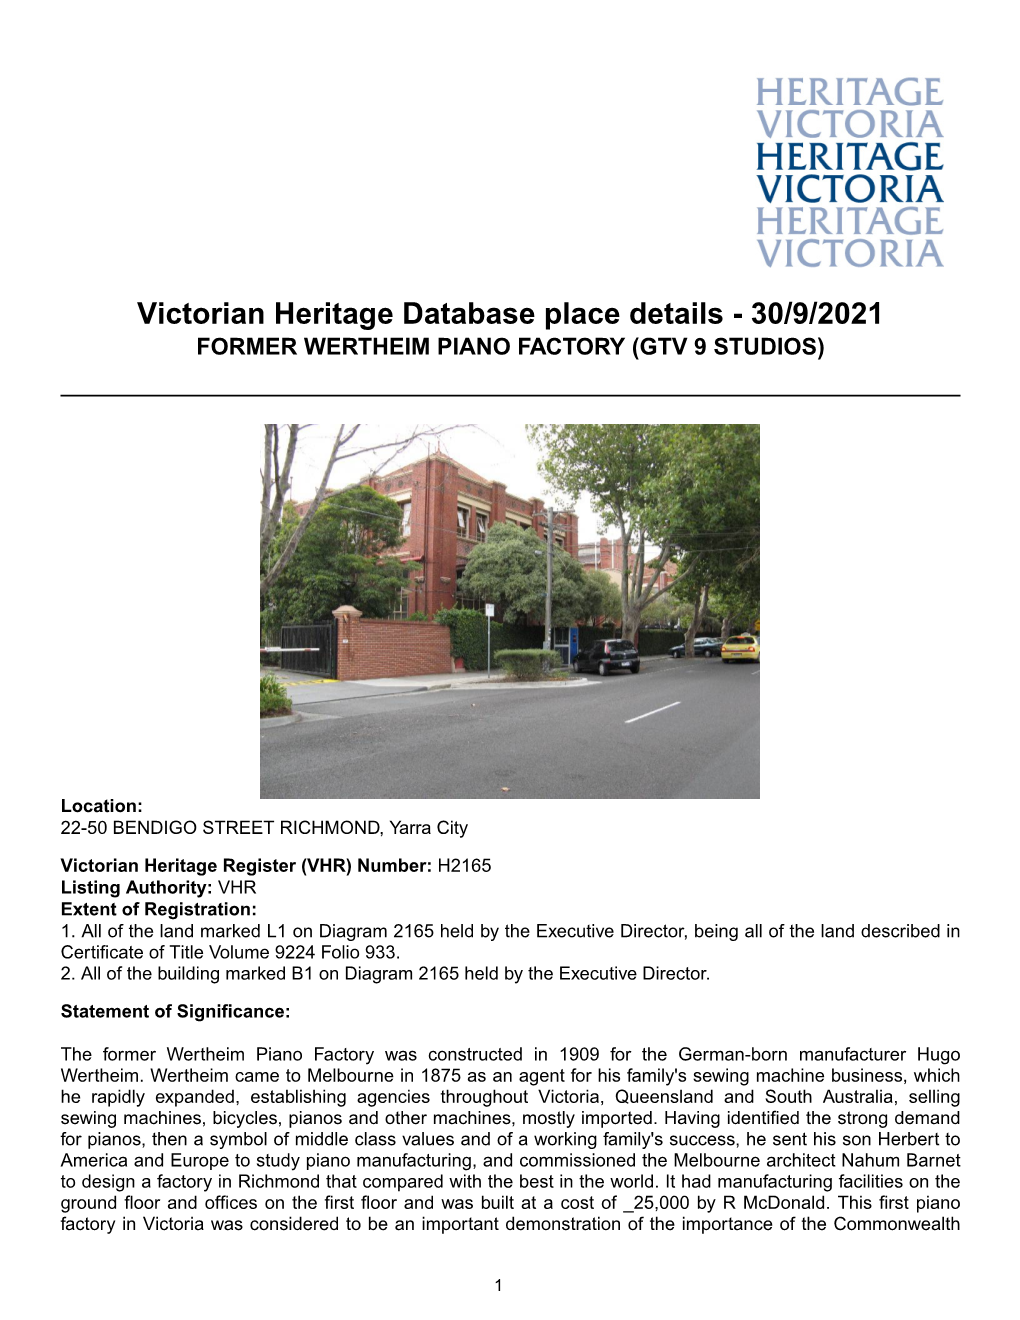 Victorian Heritage Database Place Details - 30/9/2021 FORMER WERTHEIM PIANO FACTORY (GTV 9 STUDIOS)